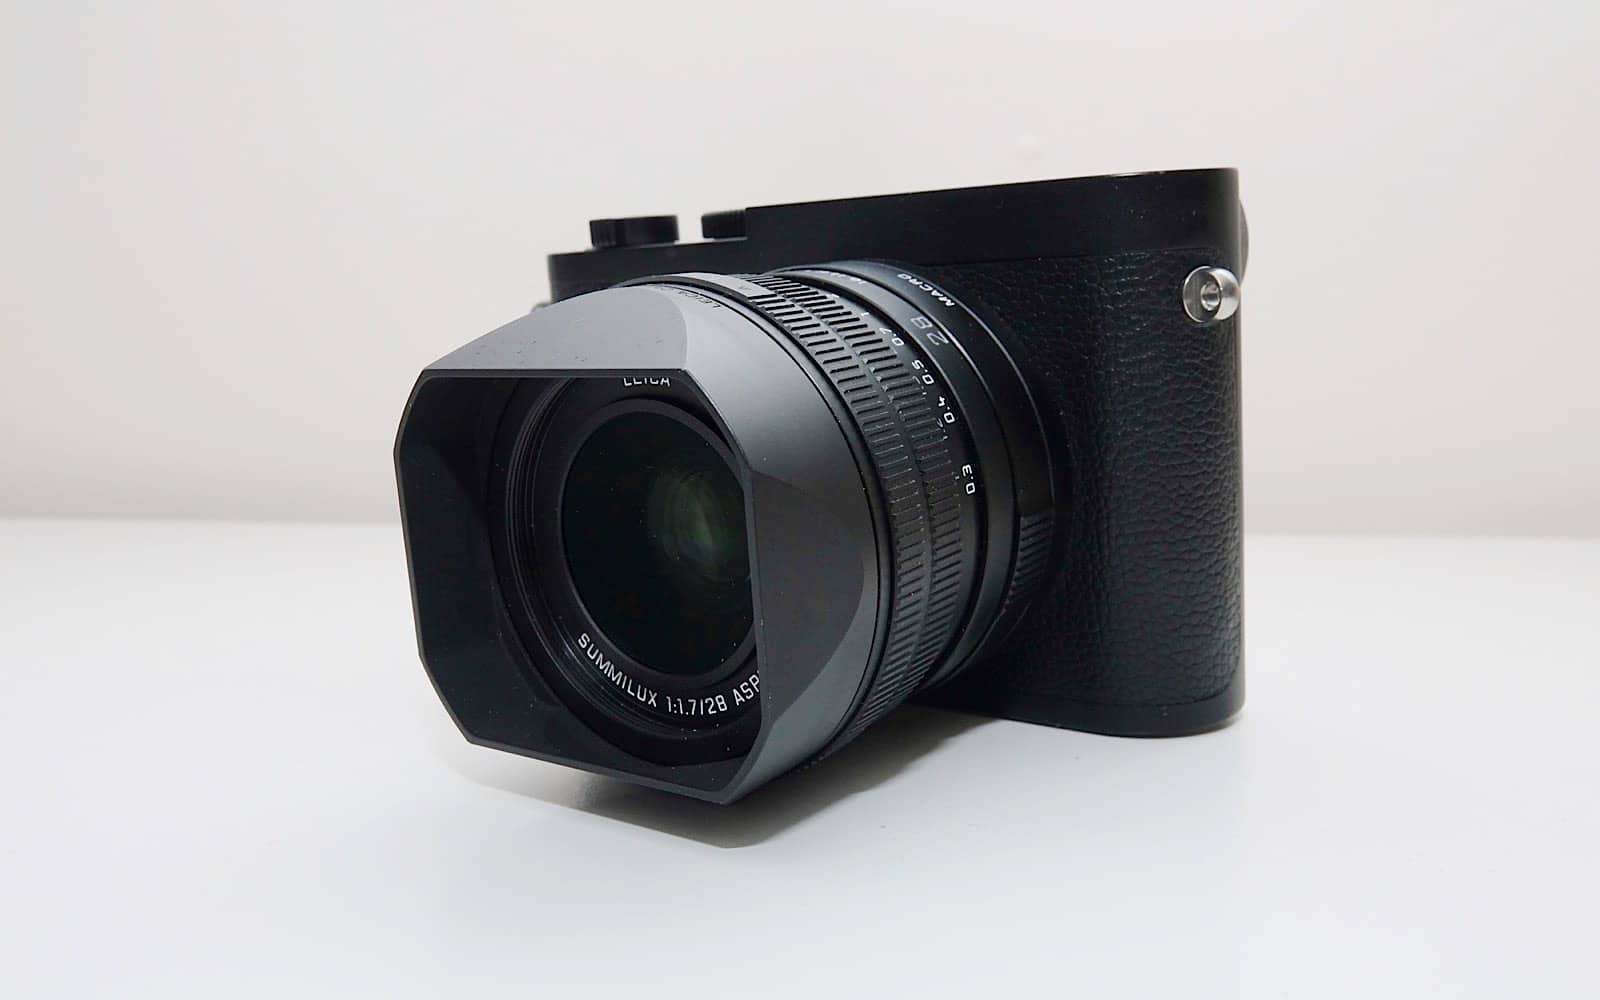 Leica's Q2 Monochrome reviewed